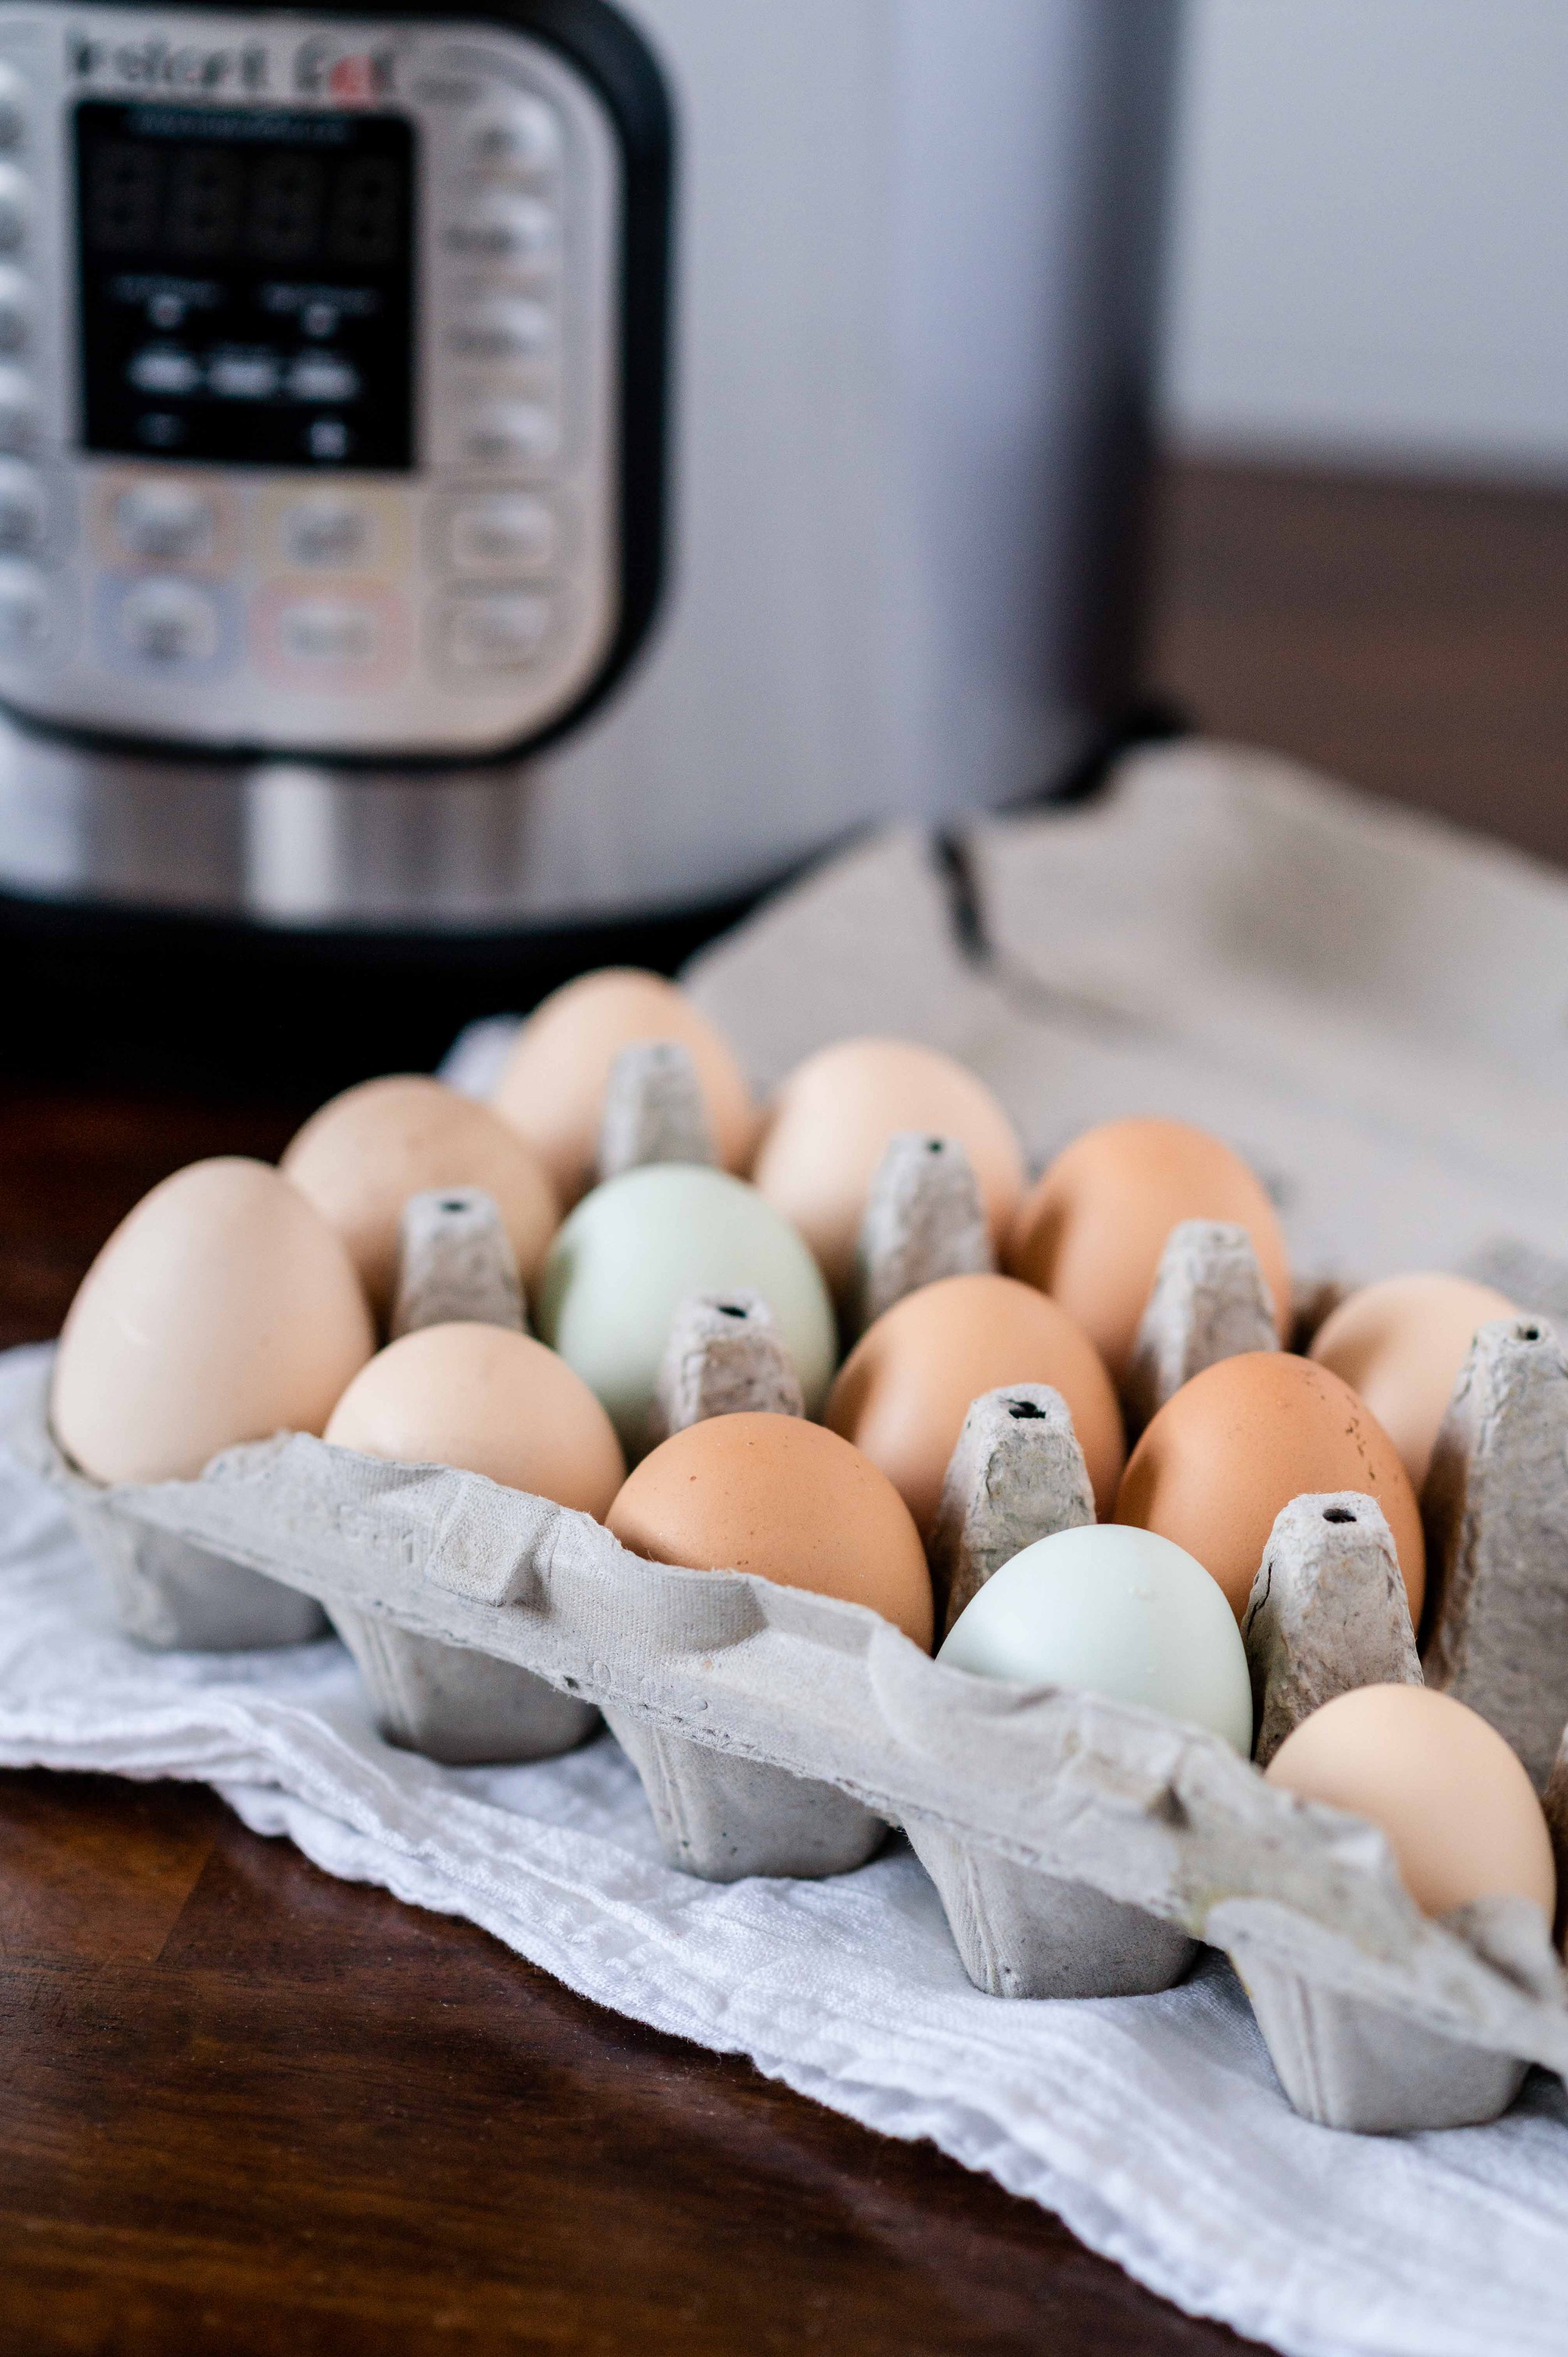 https://images.squarespace-cdn.com/content/v1/587e93c7e58c621e102357a6/1ecc4fe9-51db-4ff5-9c6a-5f5fd551bcb9/Easy+Peel+Instant+Pot+Hard+Boiled+Eggs+Recipe+Method+-+How+to+Boil+Fresh+Eggs+-+Instant+Pot+Recipe+-+Affordable+Family+Recipe+-+Homestead+Recipe+-+Affordable+Family+Recipe+-+Morgan+Tayler